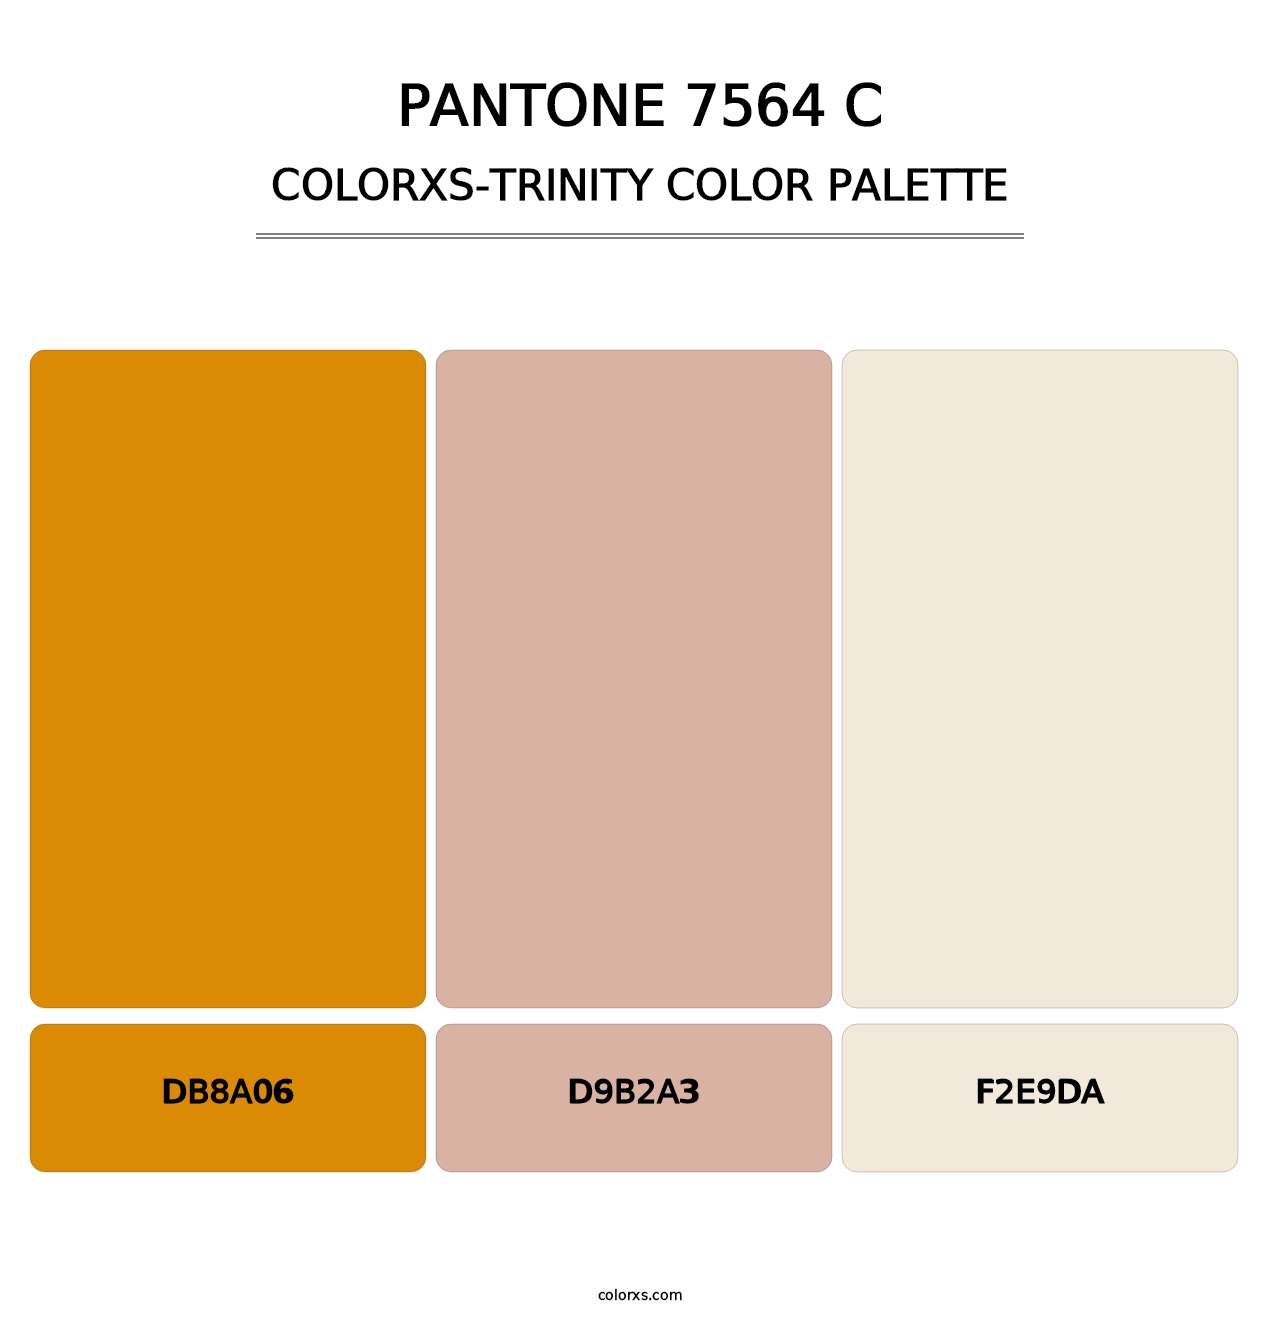 PANTONE 7564 C - Colorxs Trinity Palette